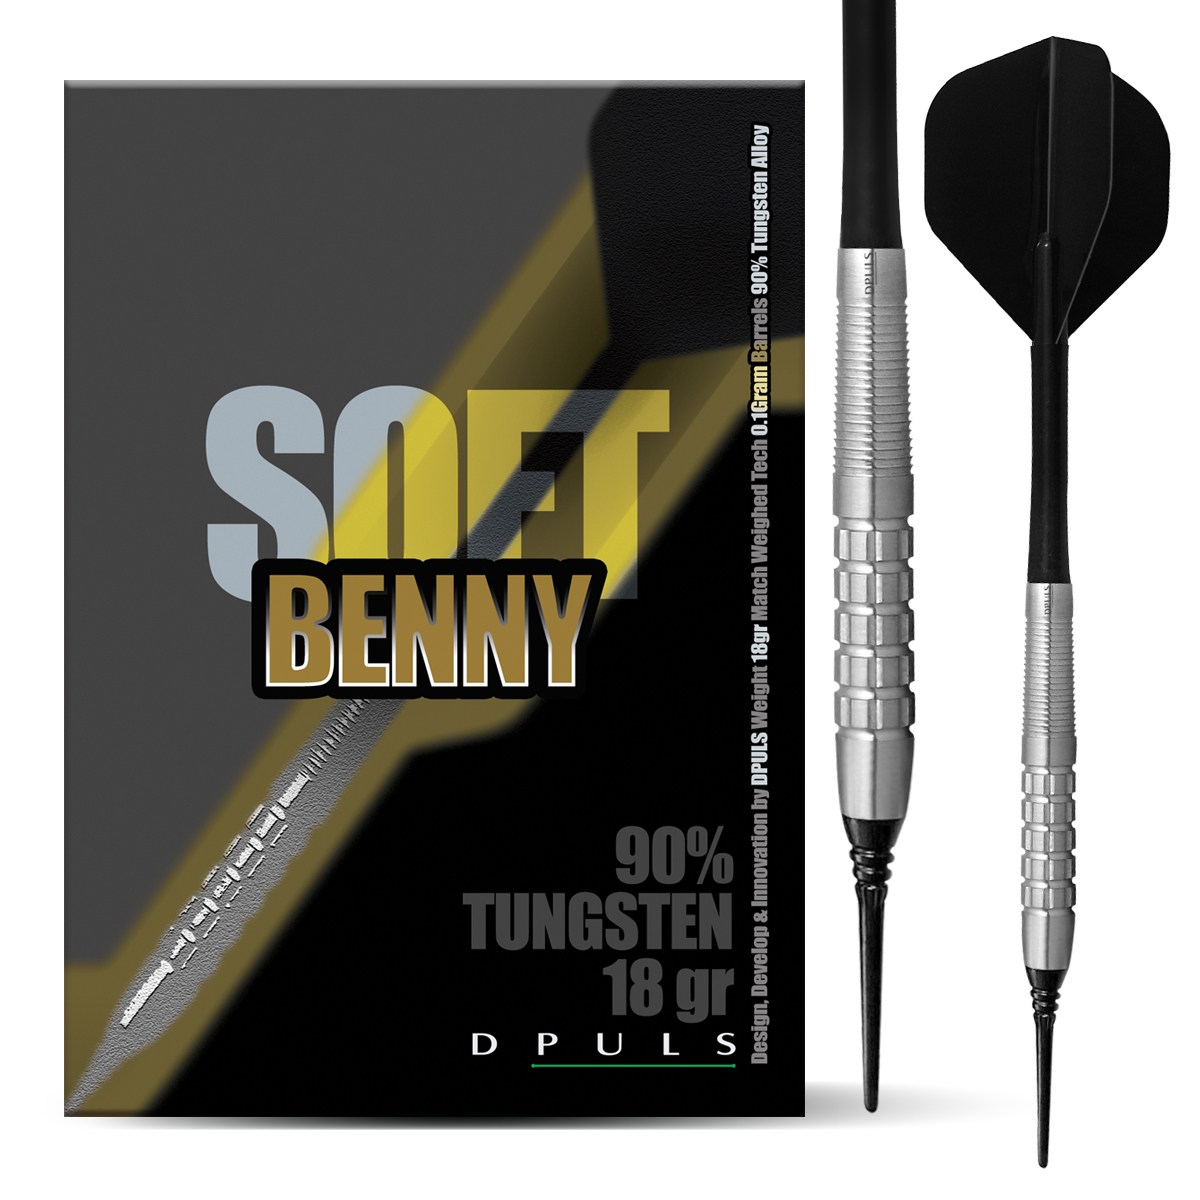 Benny 90% by DPuls Tungsten 18gr